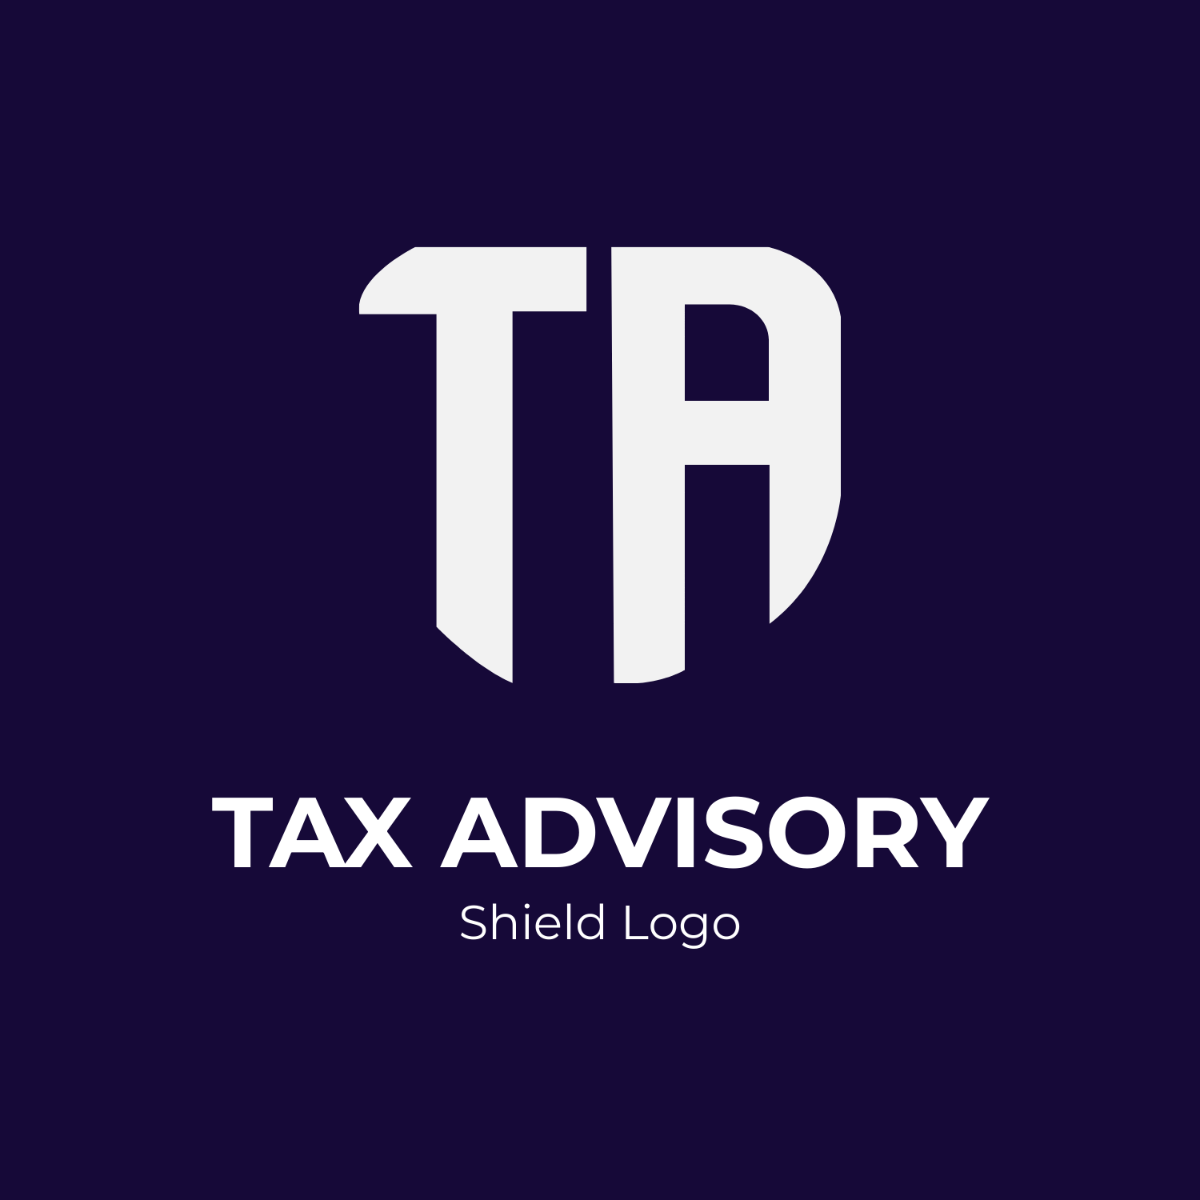 Tax Advisory Shield Logo Template